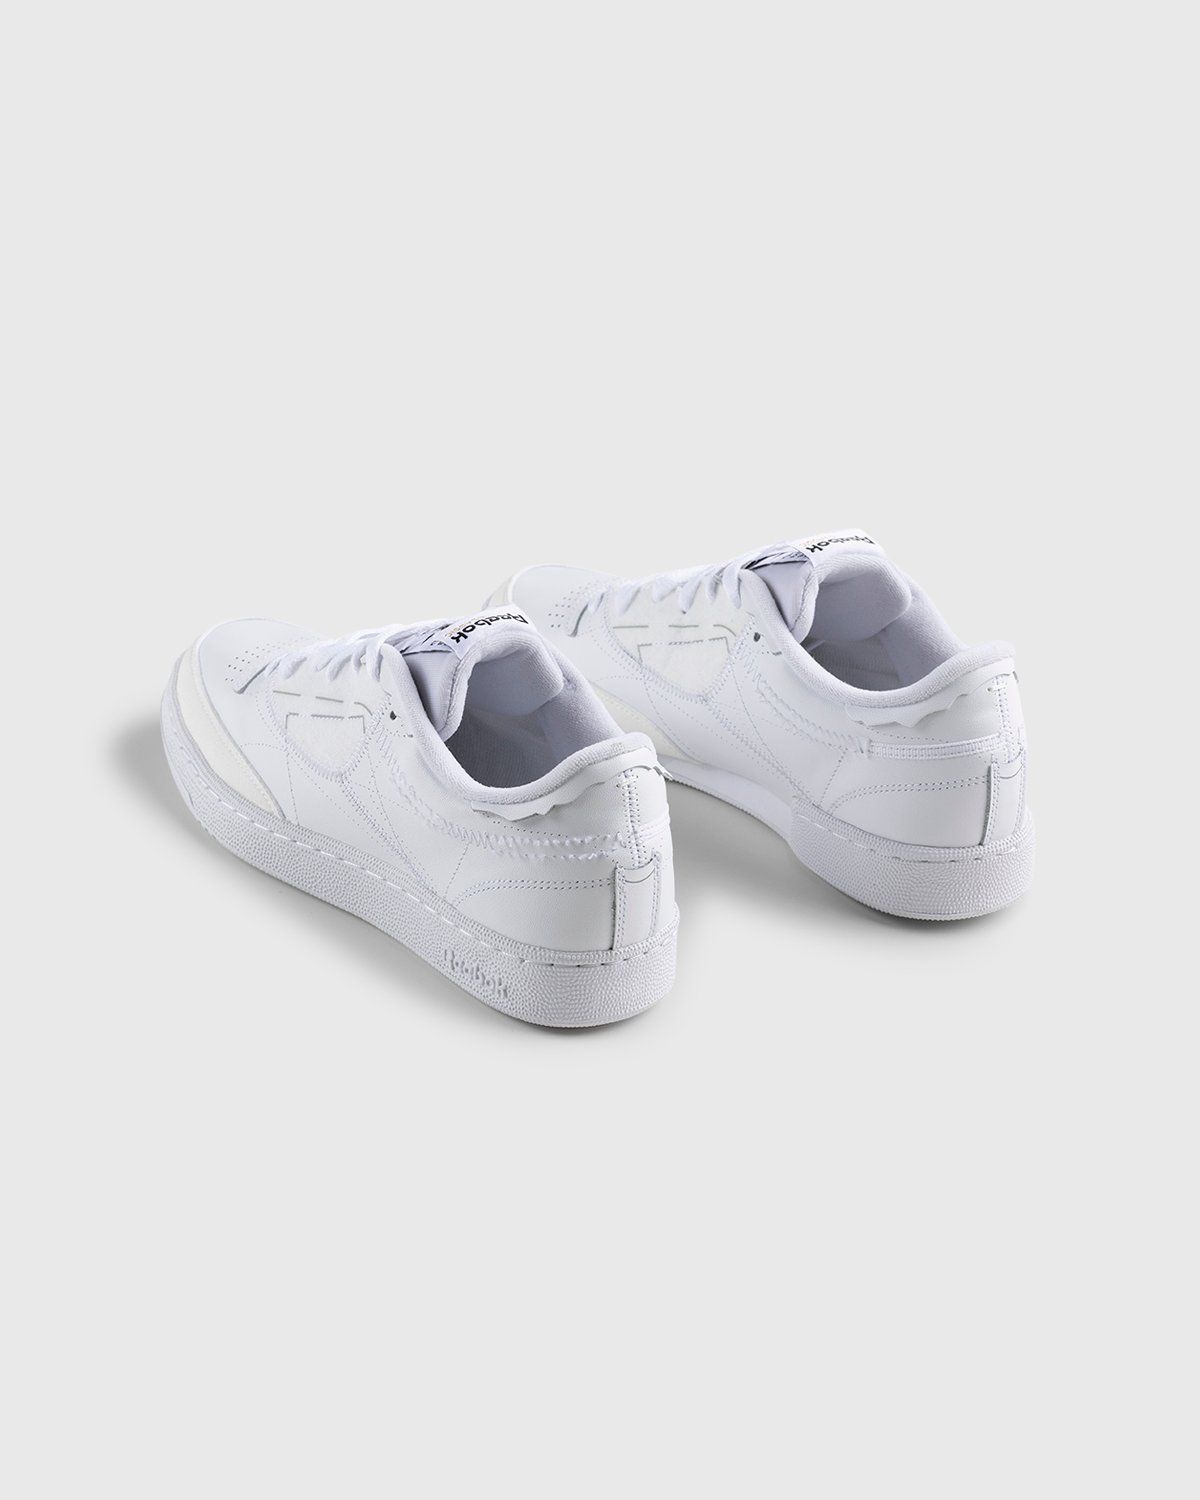 Maison Margiela x Reebok – Club C Memory Of Footwear White/Black/Footwear White - Low Top Sneakers - White - Image 5